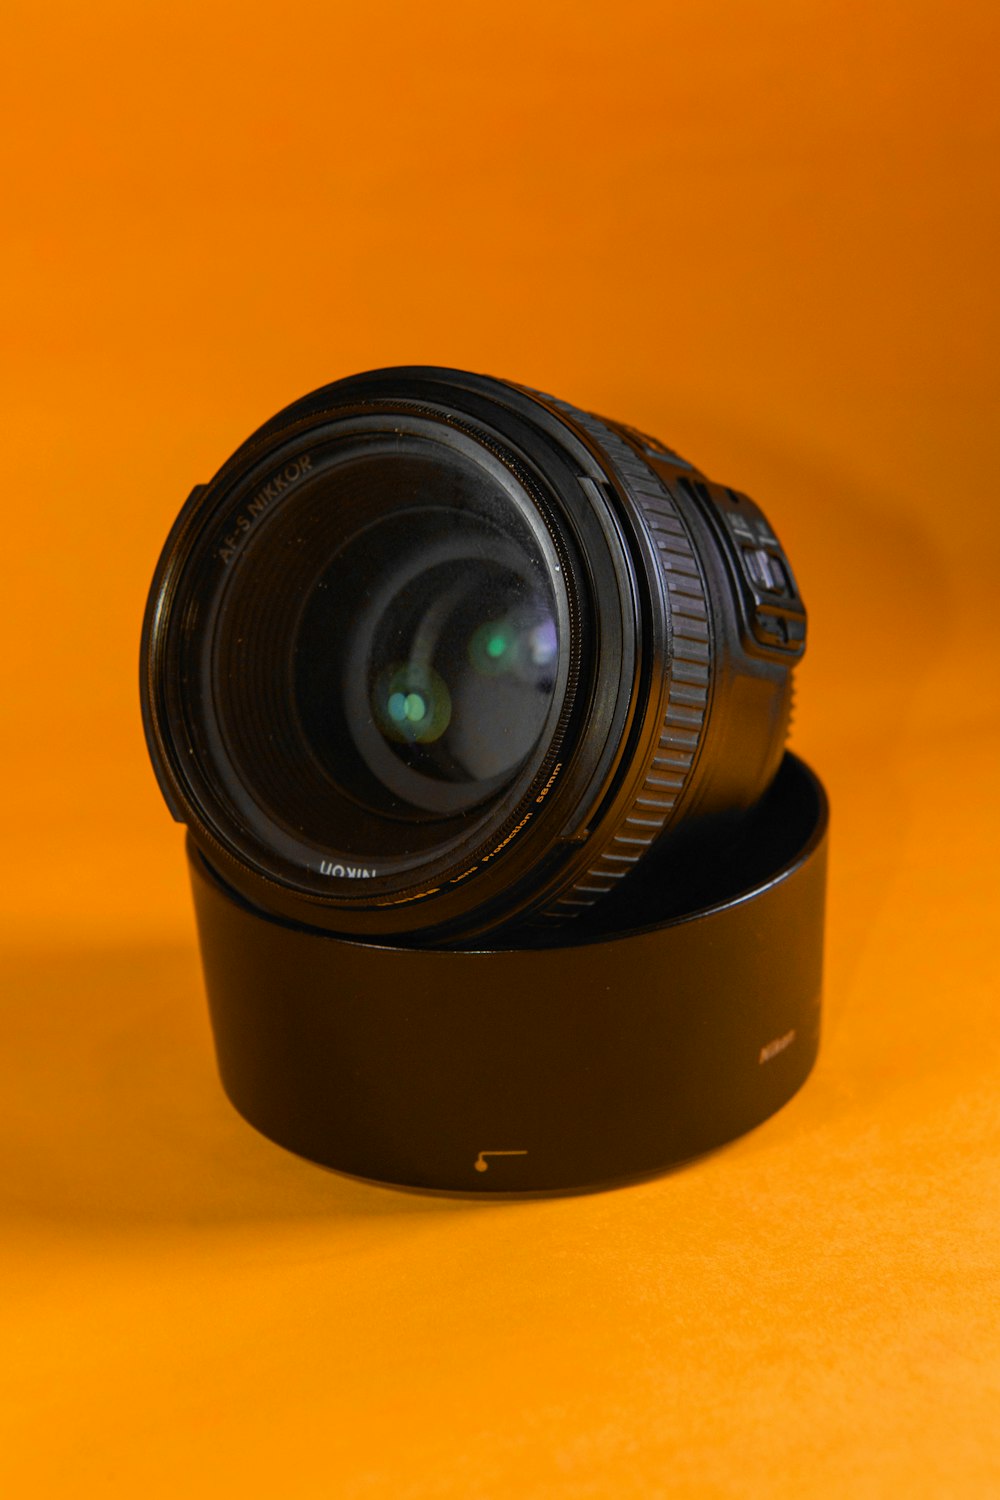 black camera lens on orange surface